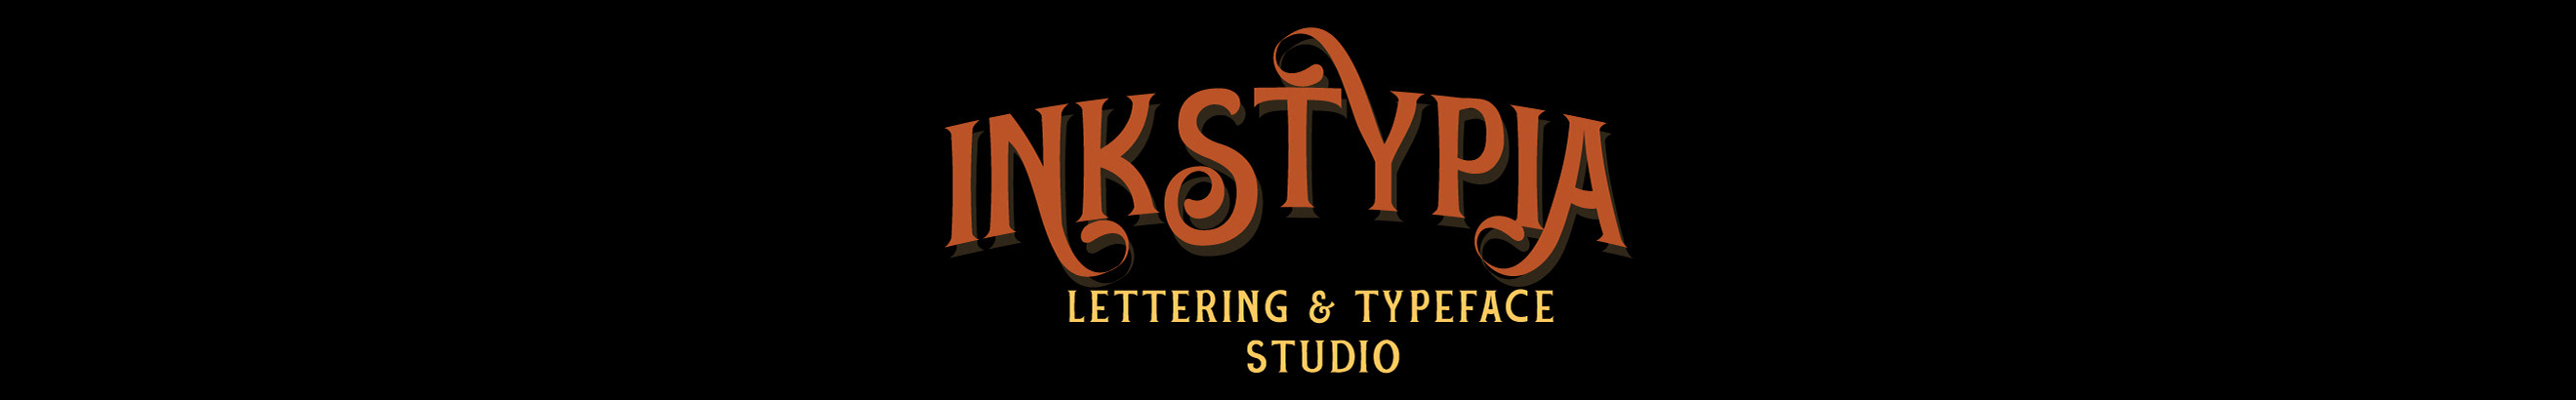 INKsTYPIA studio's profile banner